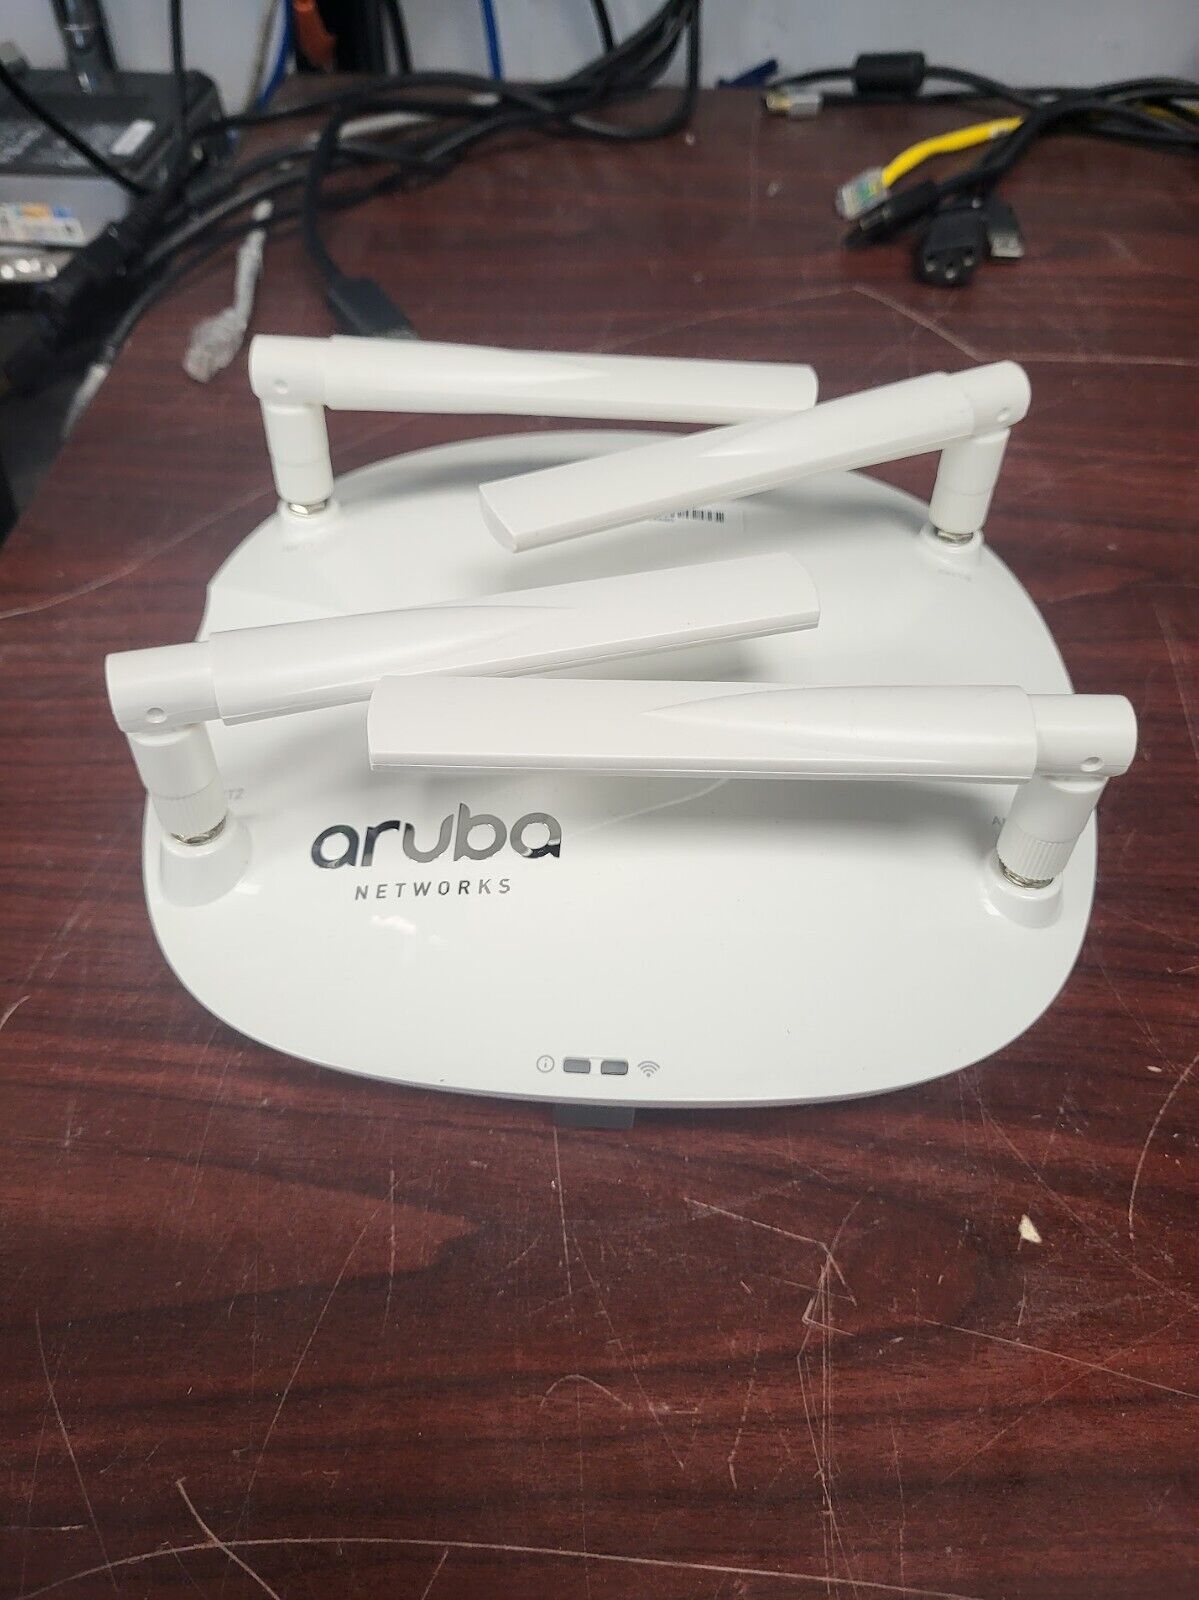 Aruba APIN0324 AP-324 IEEE 802.11ac Wireless Access Point w/ Antenna #73